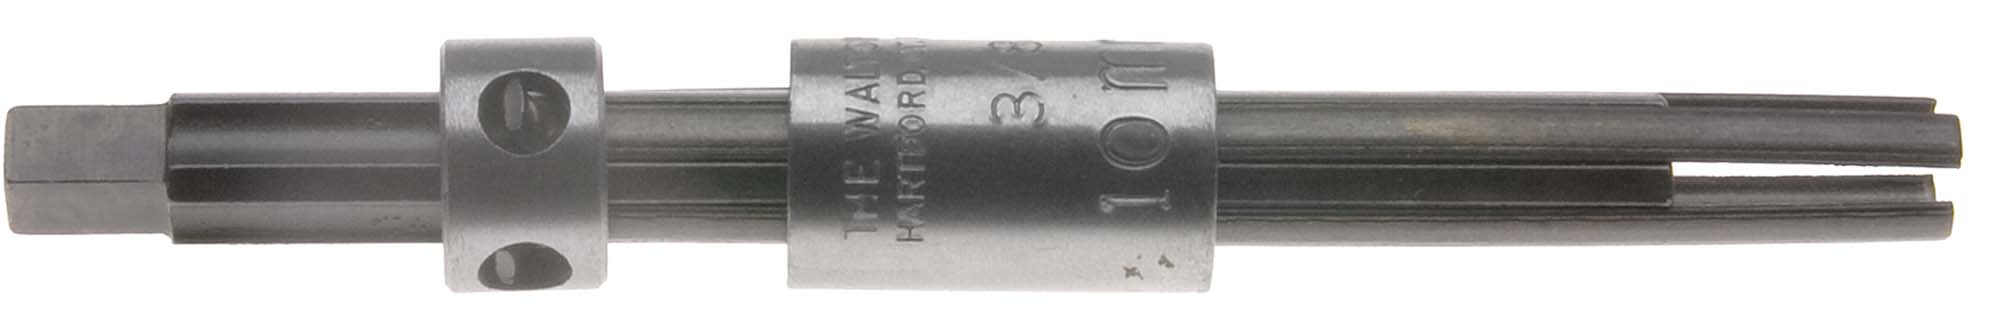 5/8" 4 Flute Walton Tap Extractor